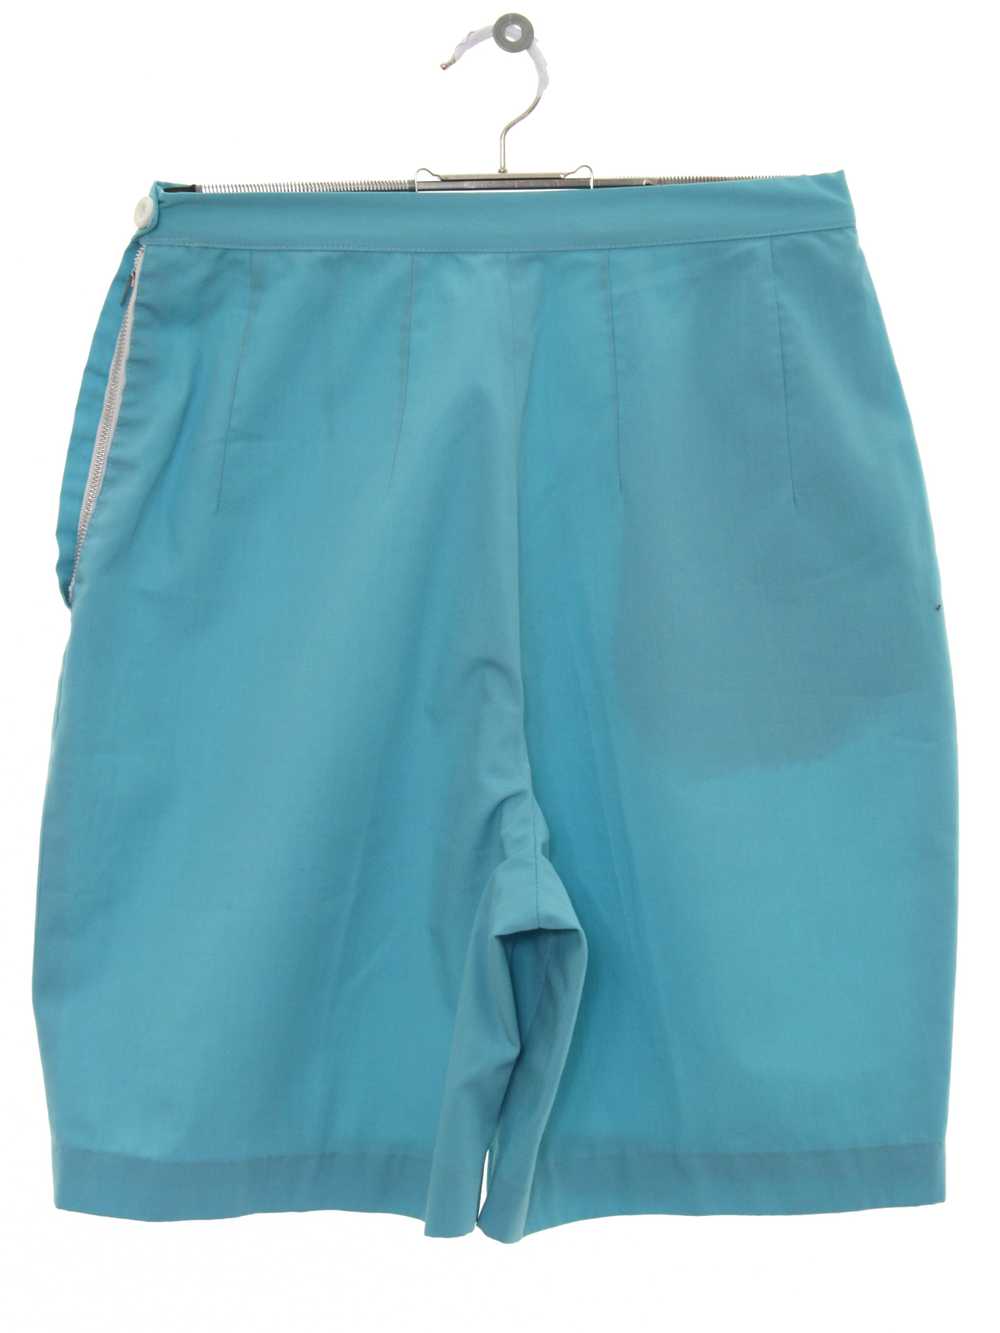 1950's Unreadable Label Womens Shorts - image 3